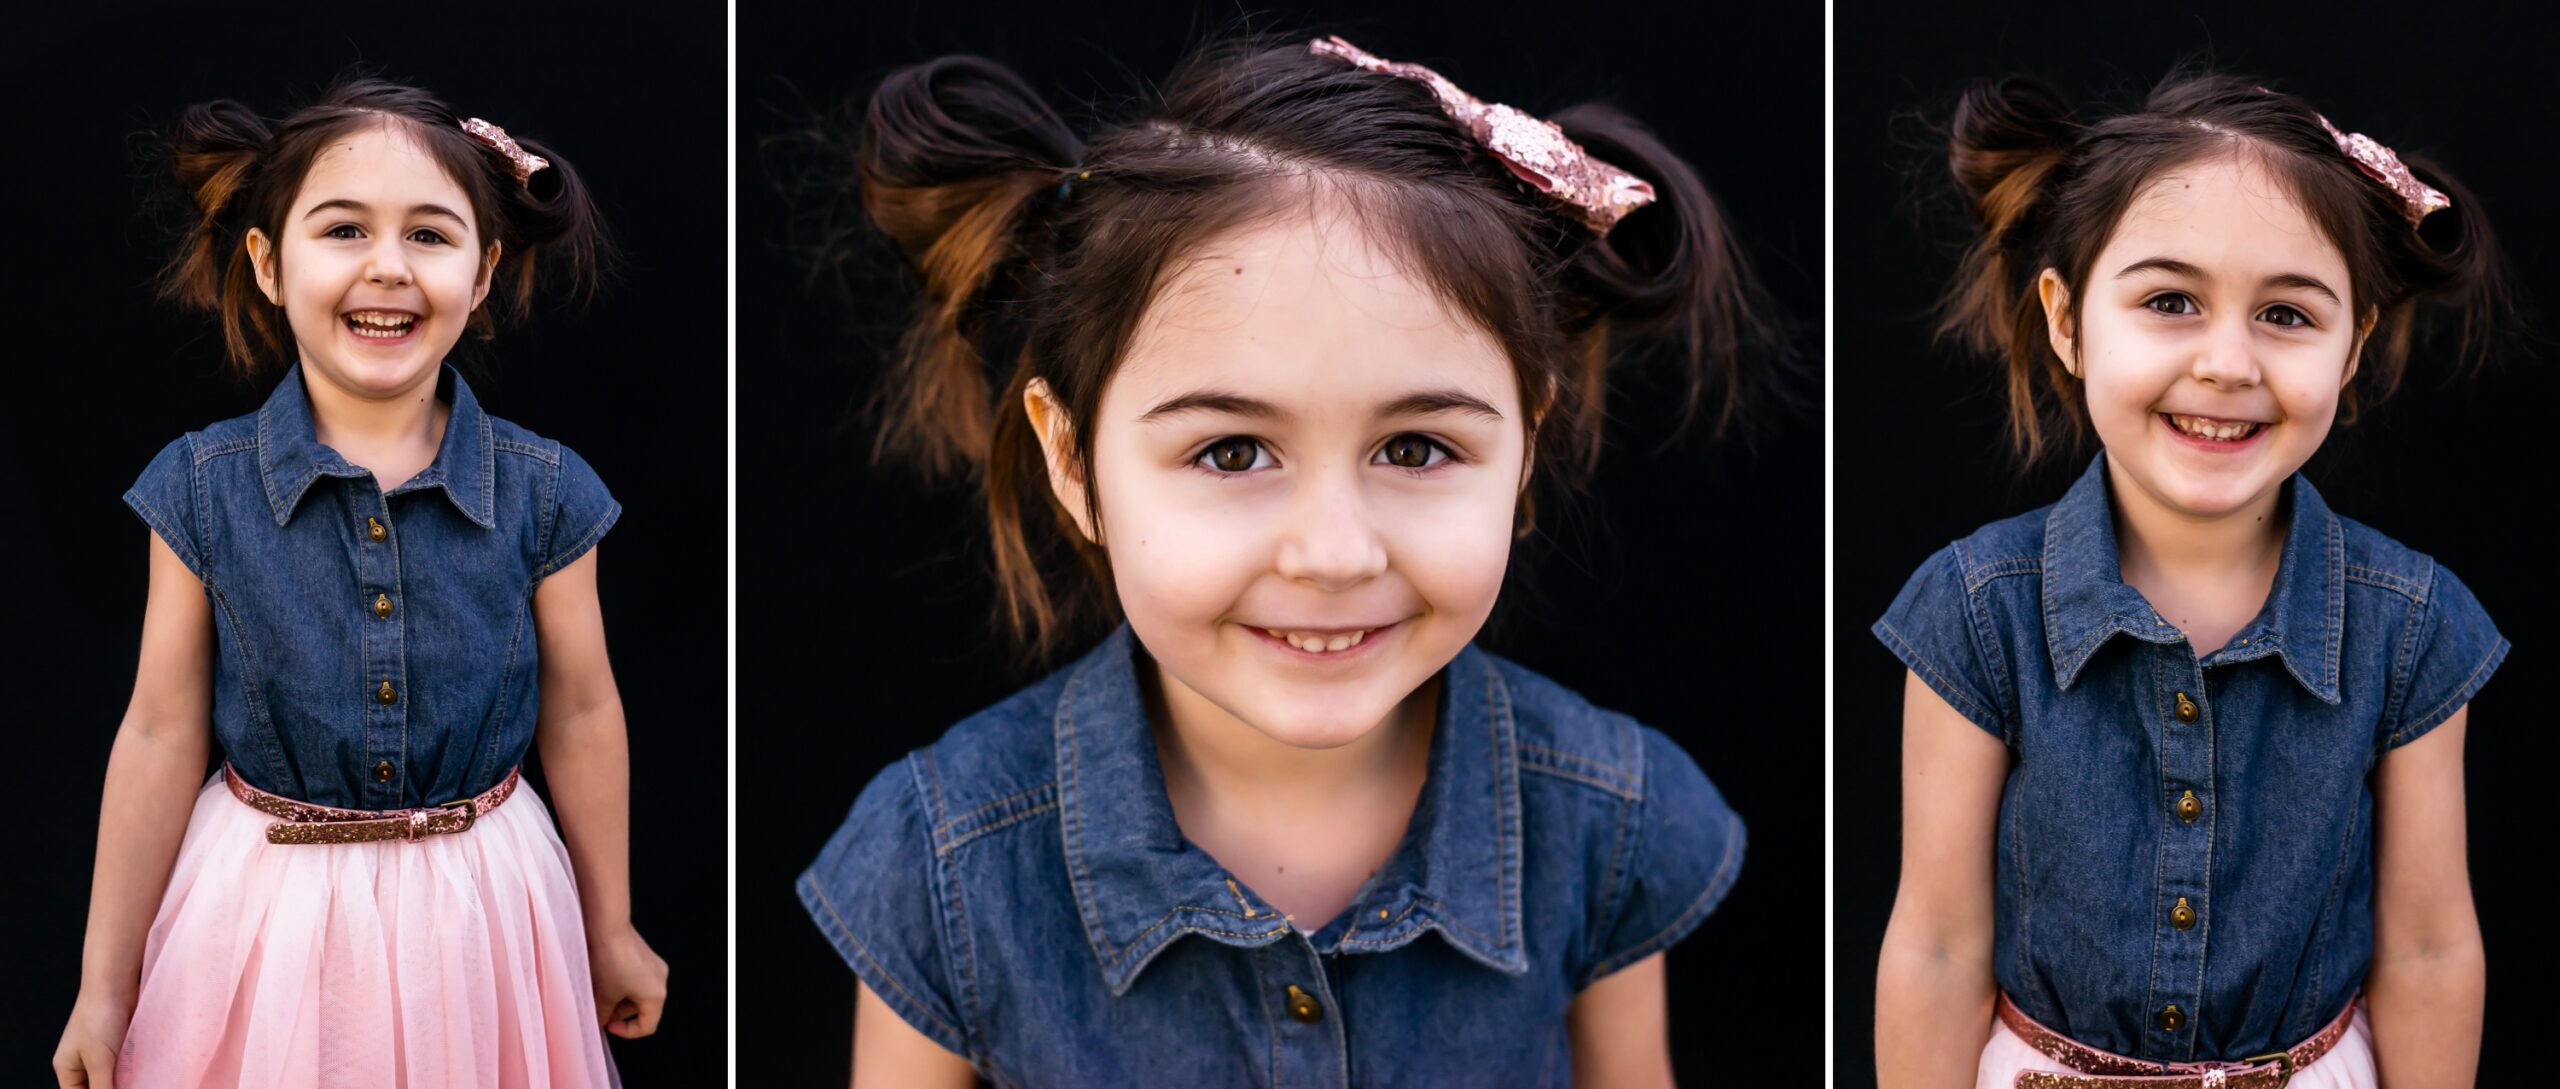 Three photos of smiling preschooler with pigtails bun and denim shirt.